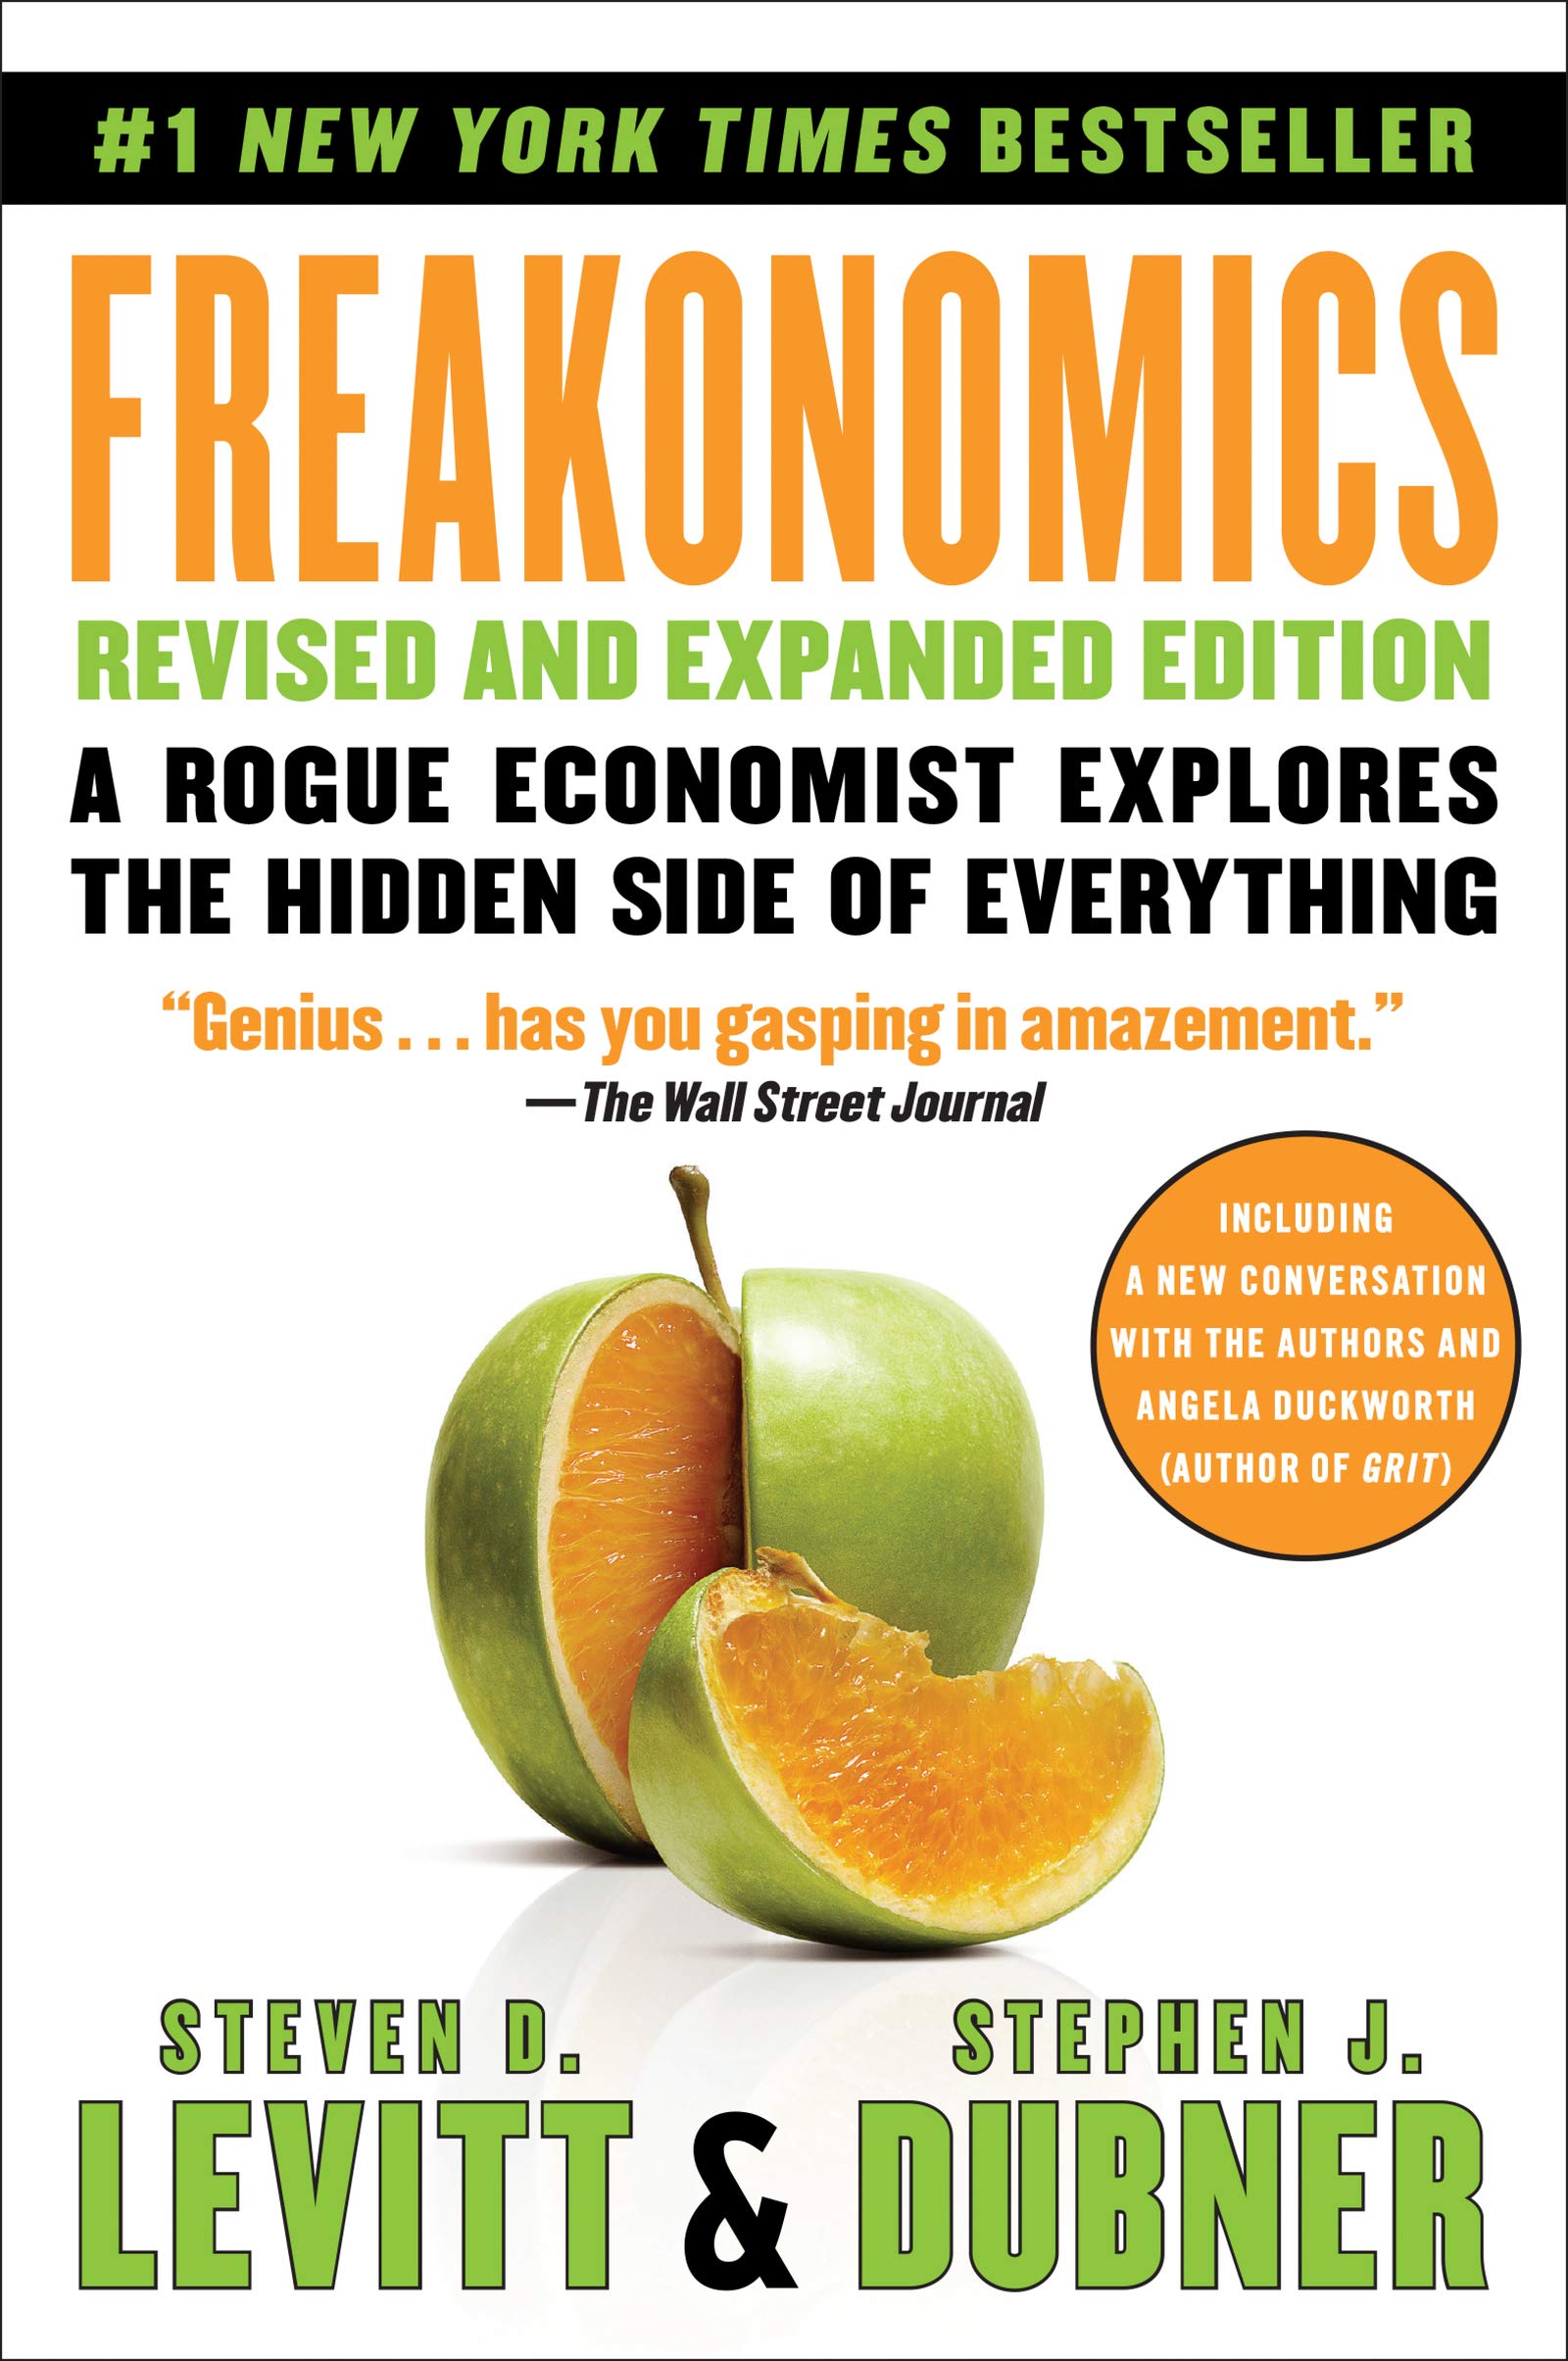 Freakonomics Rev Ed: A Rogue Economist Explores the Hidden Side of Everything (eBook) by Steven D. Levitt, Stephen J. Dubner $1.99